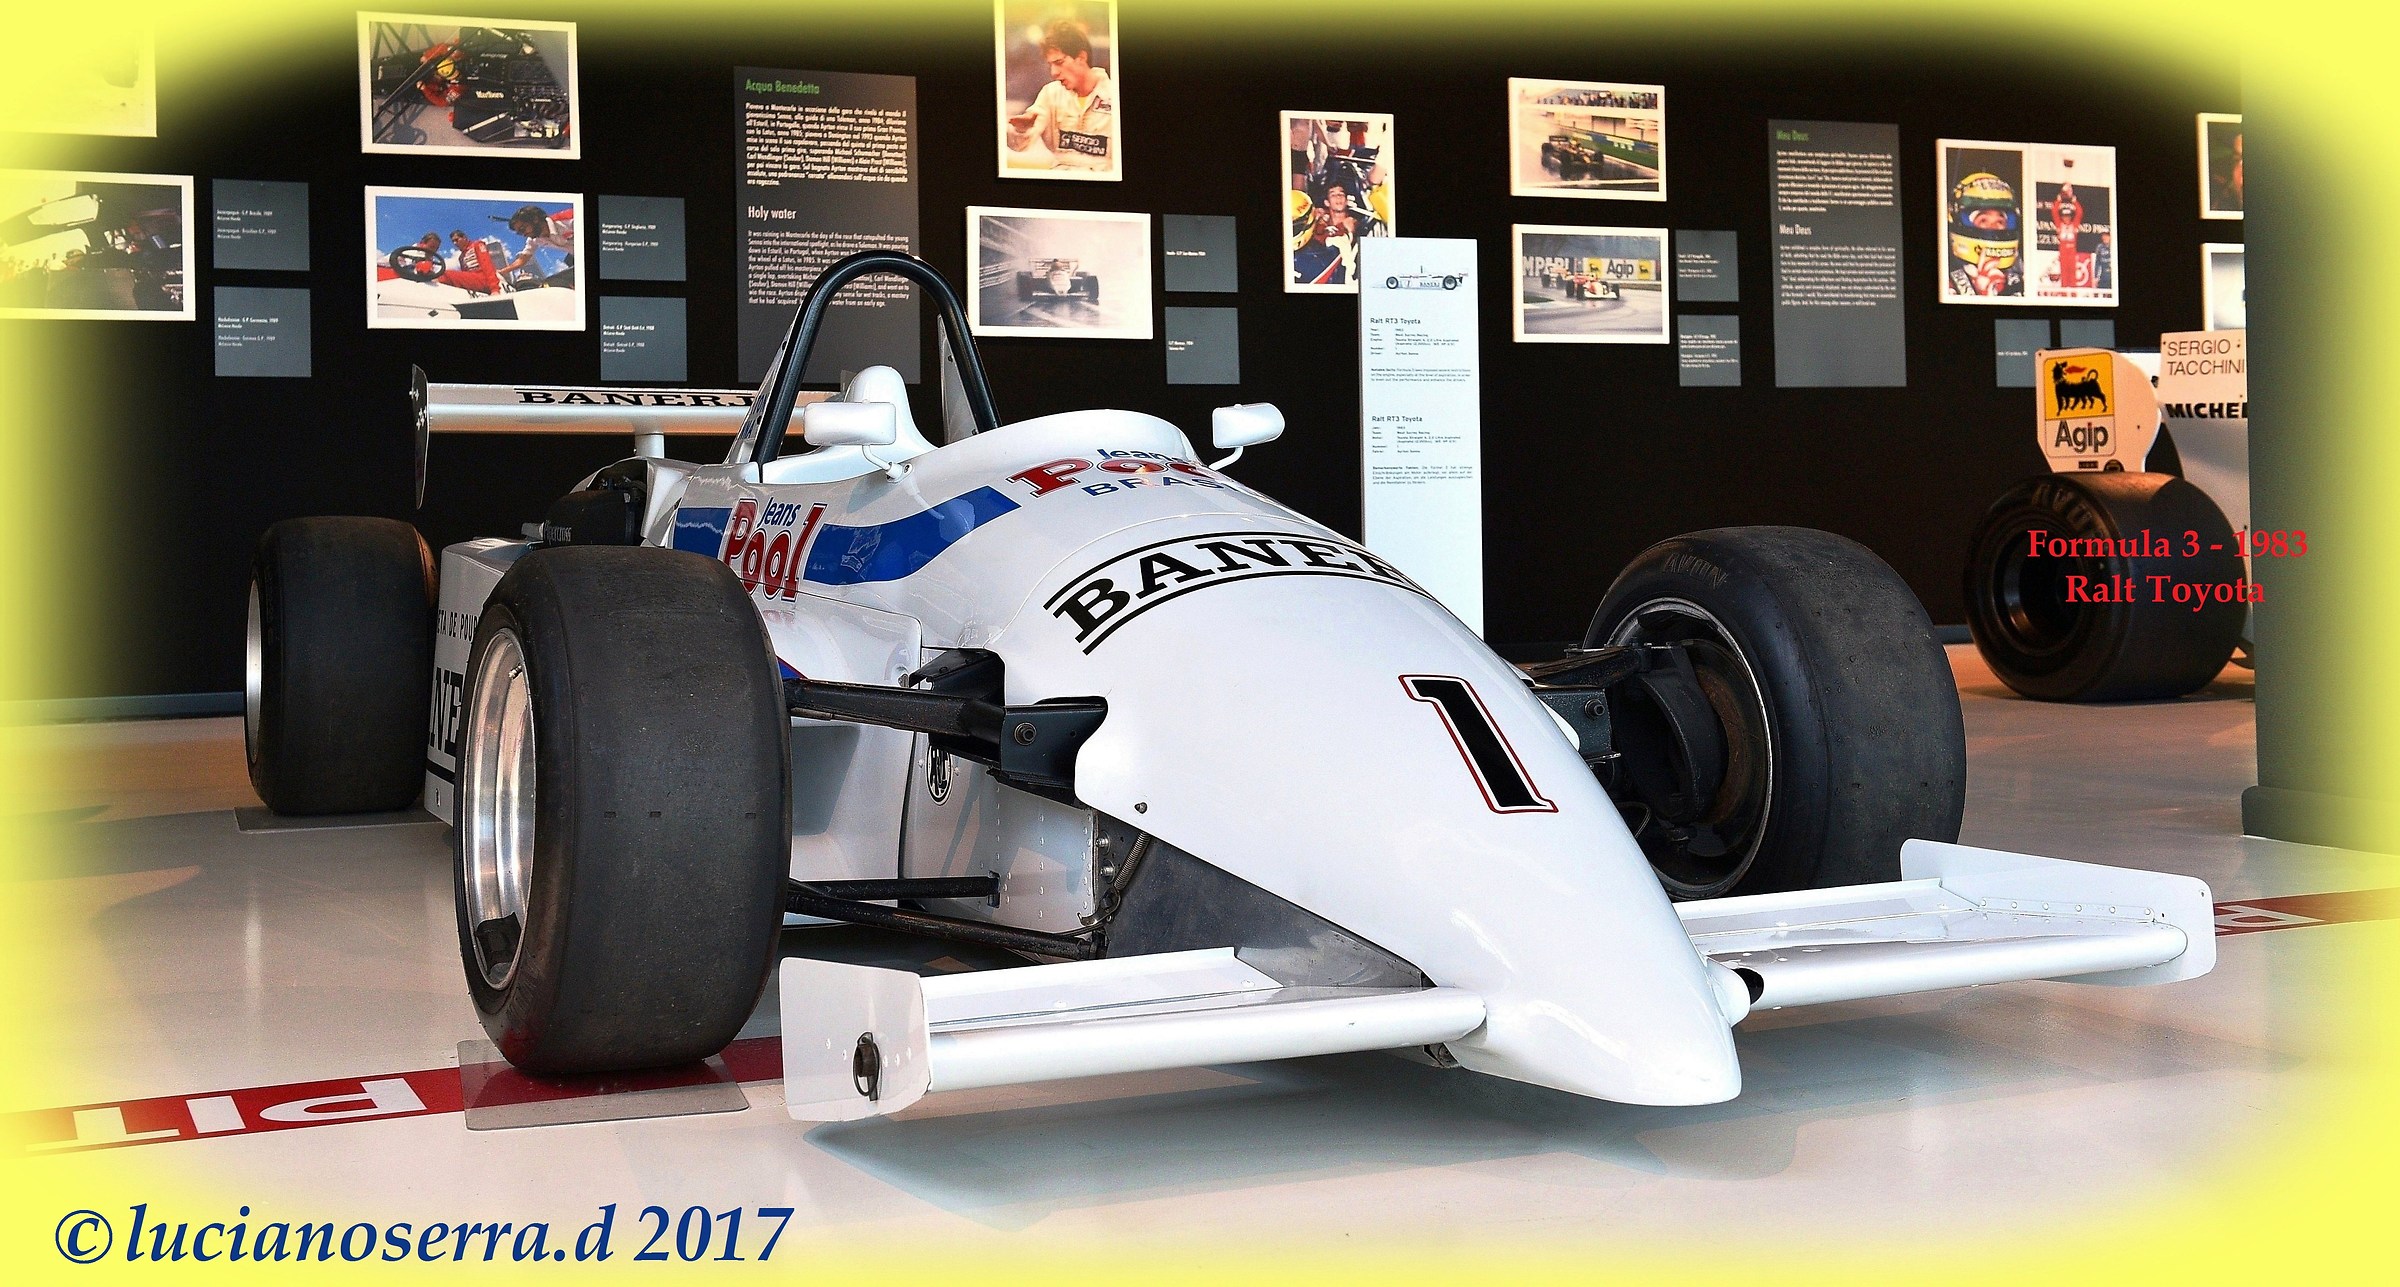 Ralt Toyota Formula 3 - 1983...